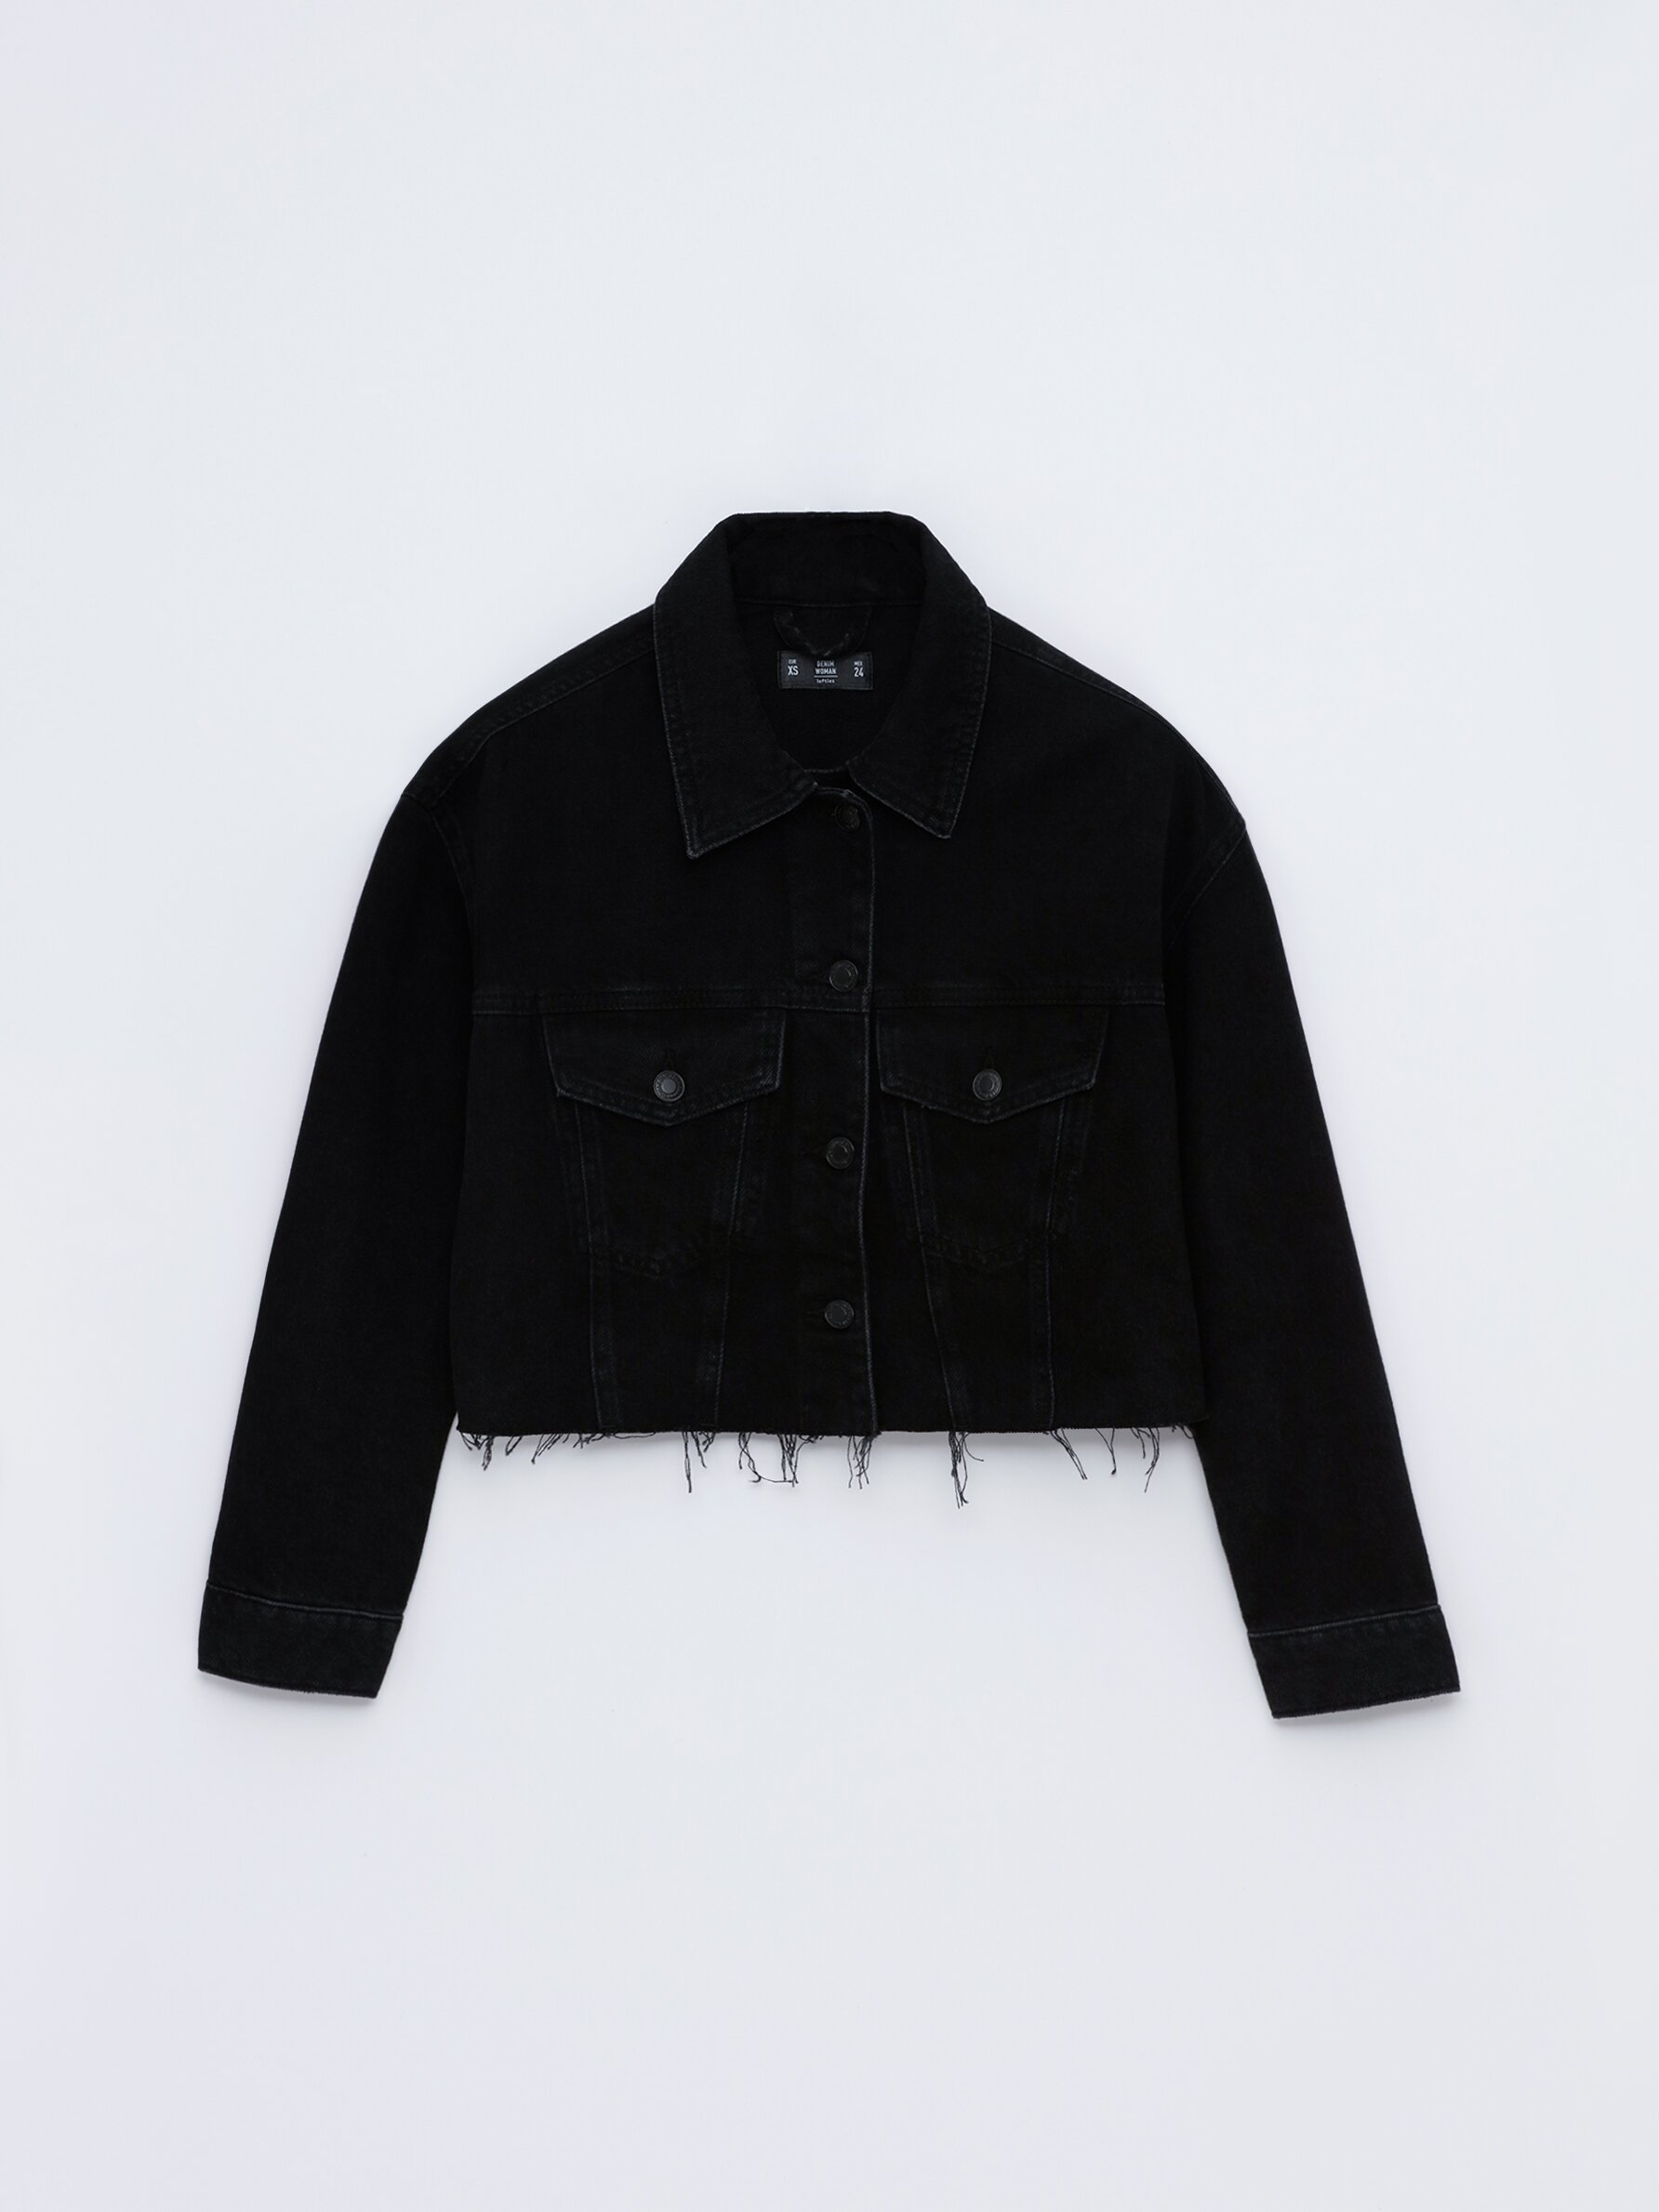 Zara Black Tweed Poplin Cropped Jacket | Zara denim jacket, Zara black,  Trench coat black